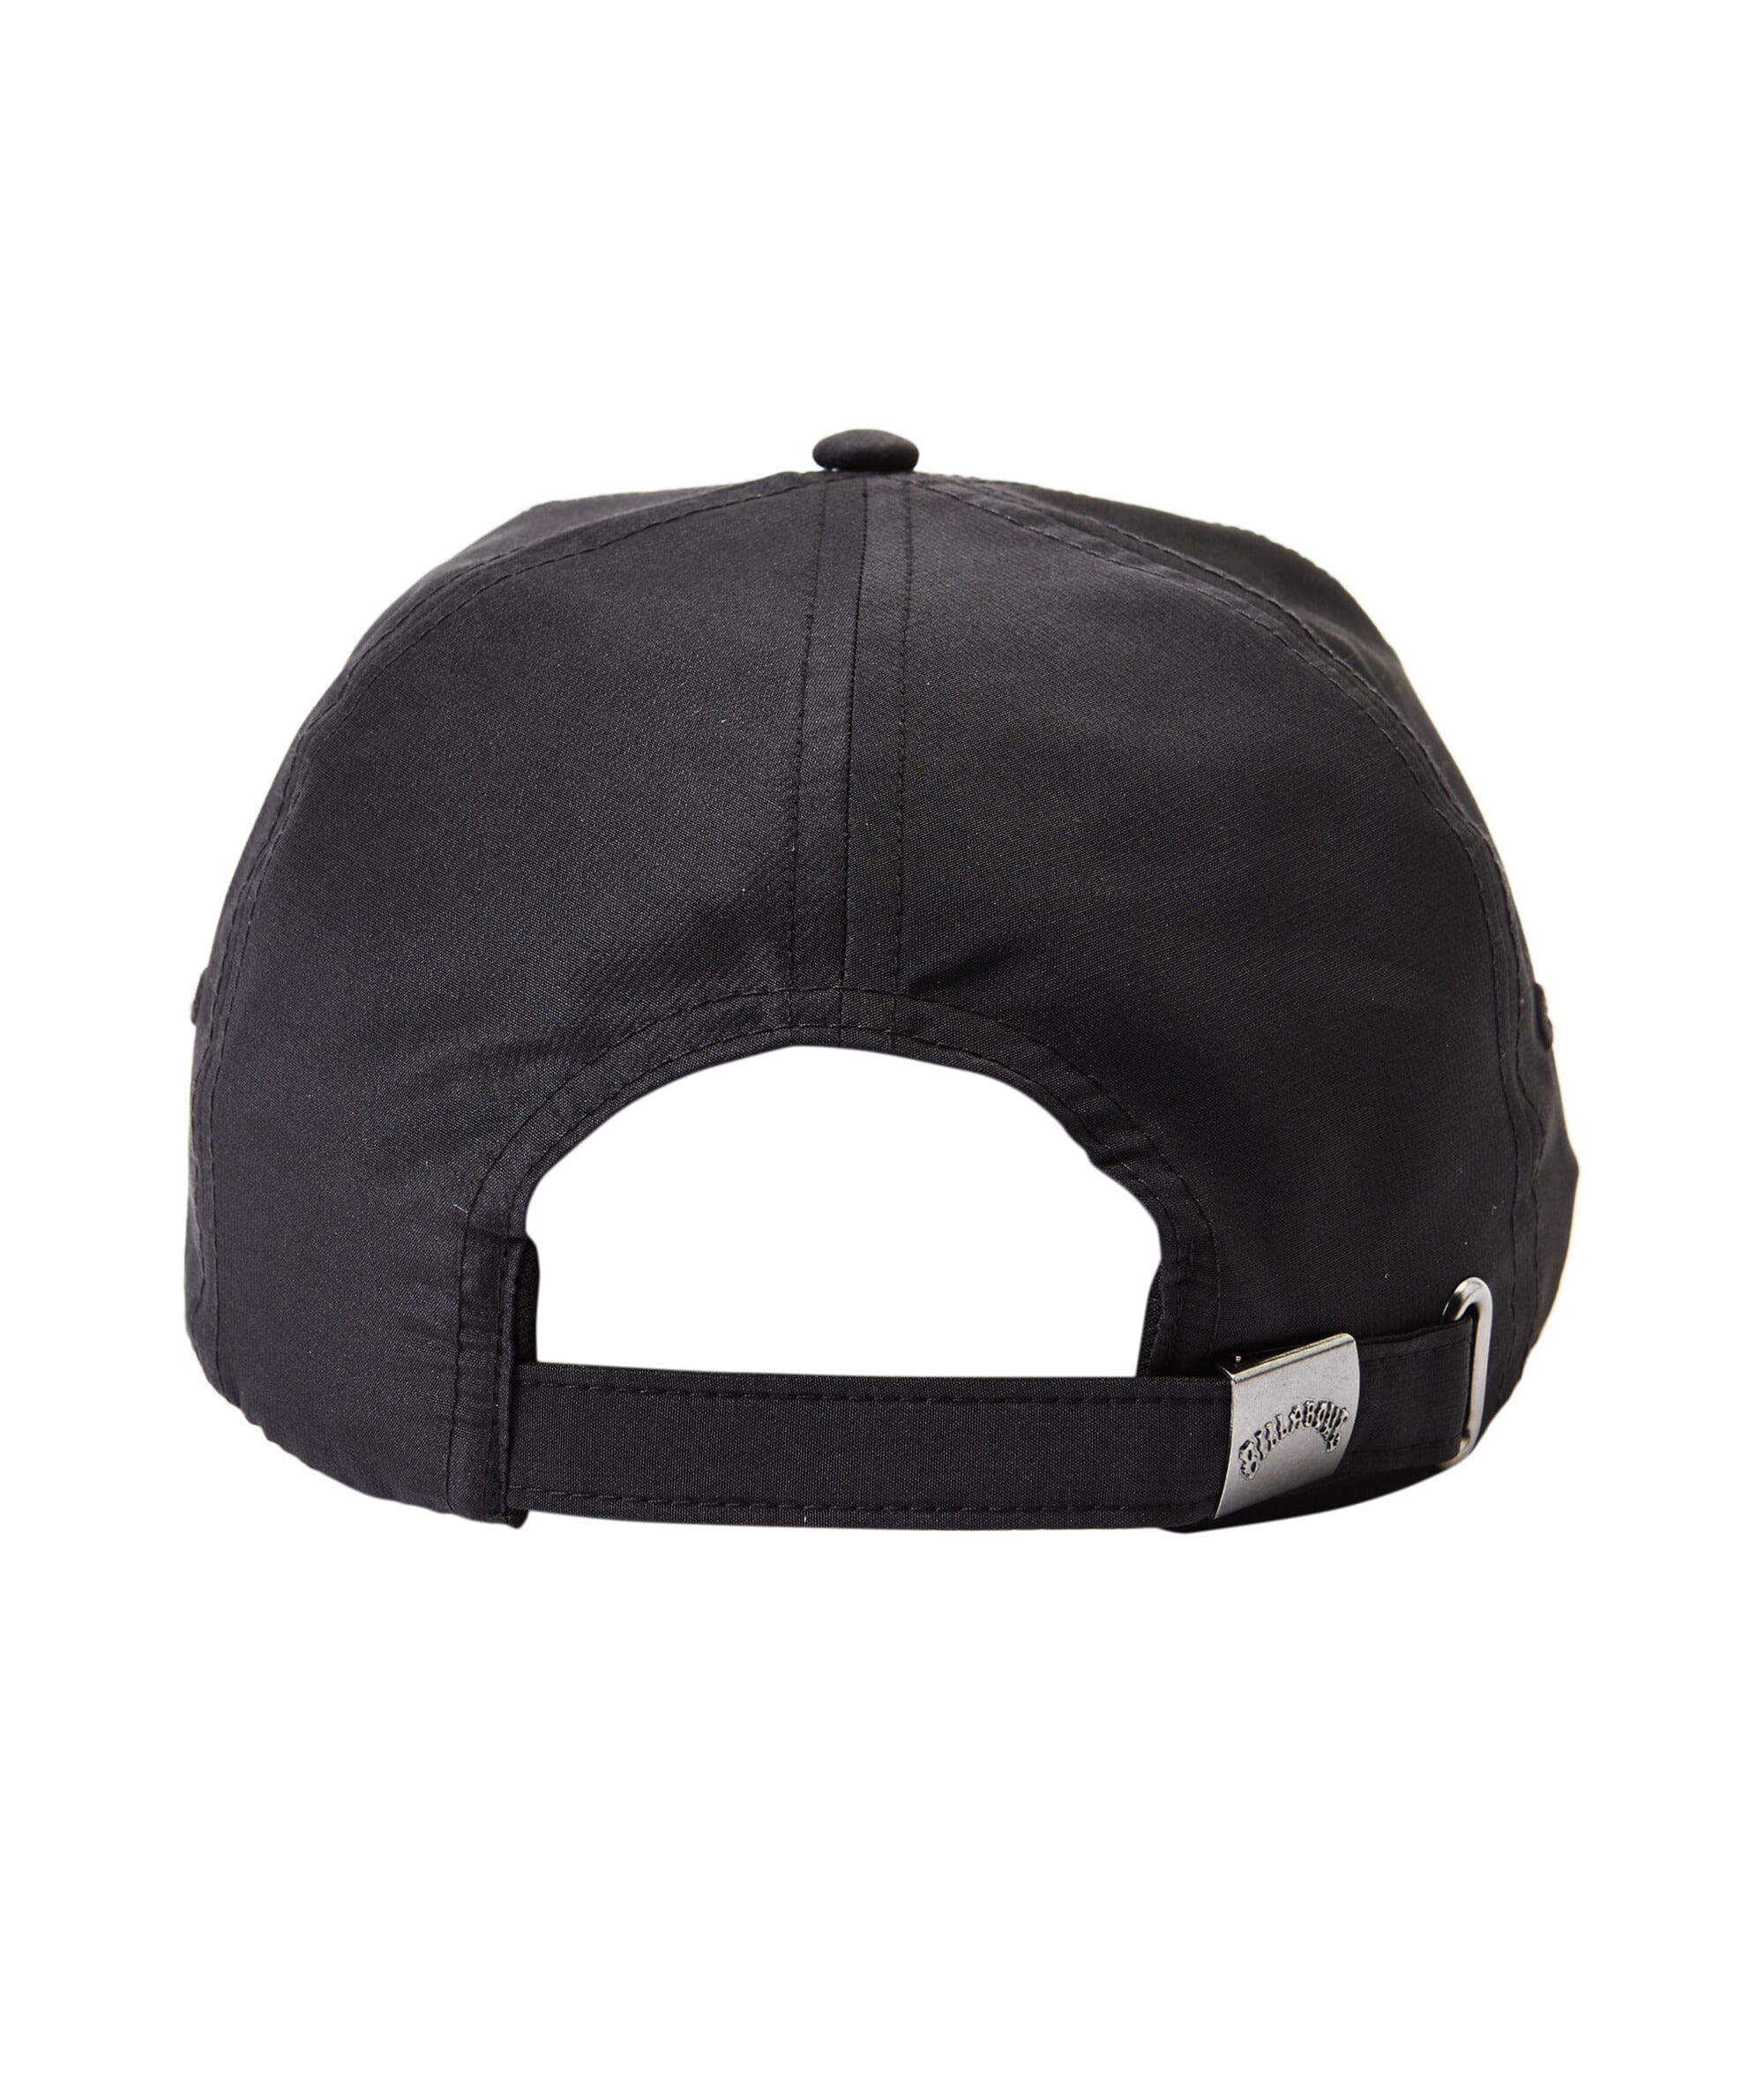 BILLABONG Arch Team Strapback Hat Black Men's Hats Billabong 